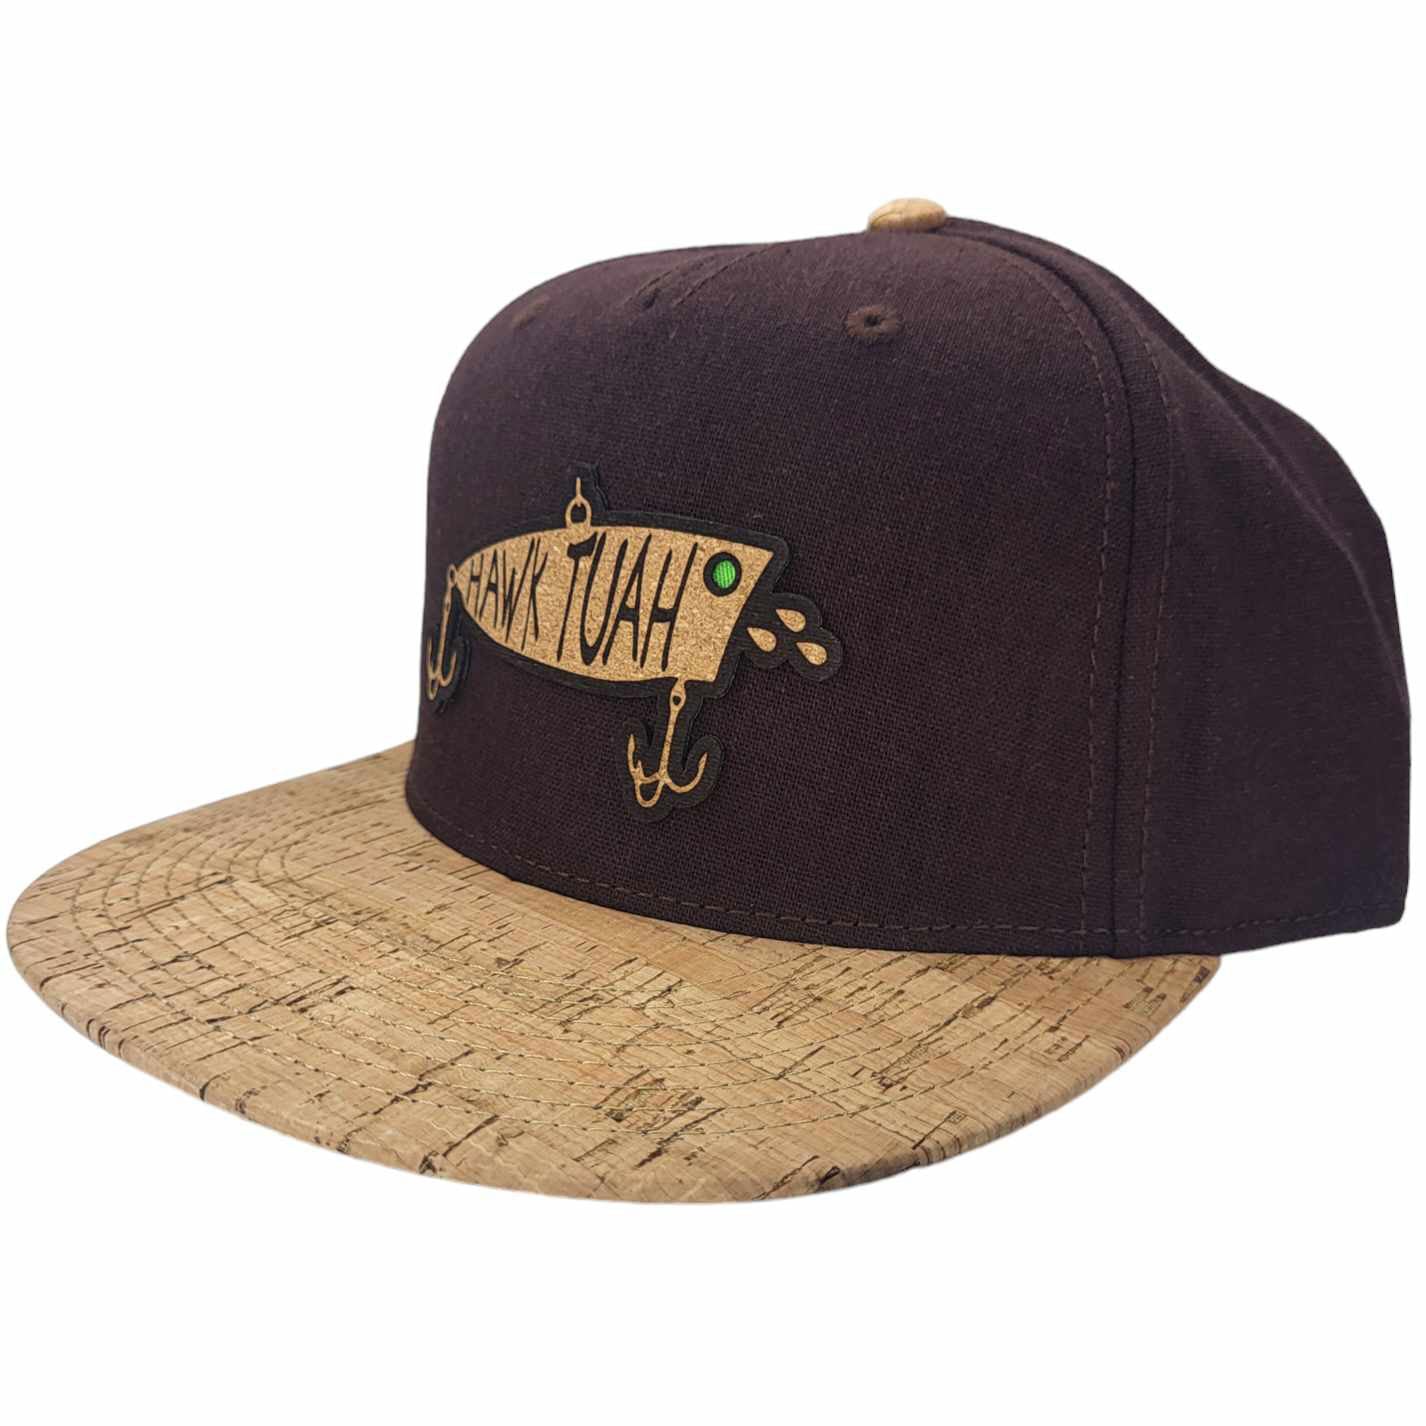 Hawk Tuah Fishing Cork Hat